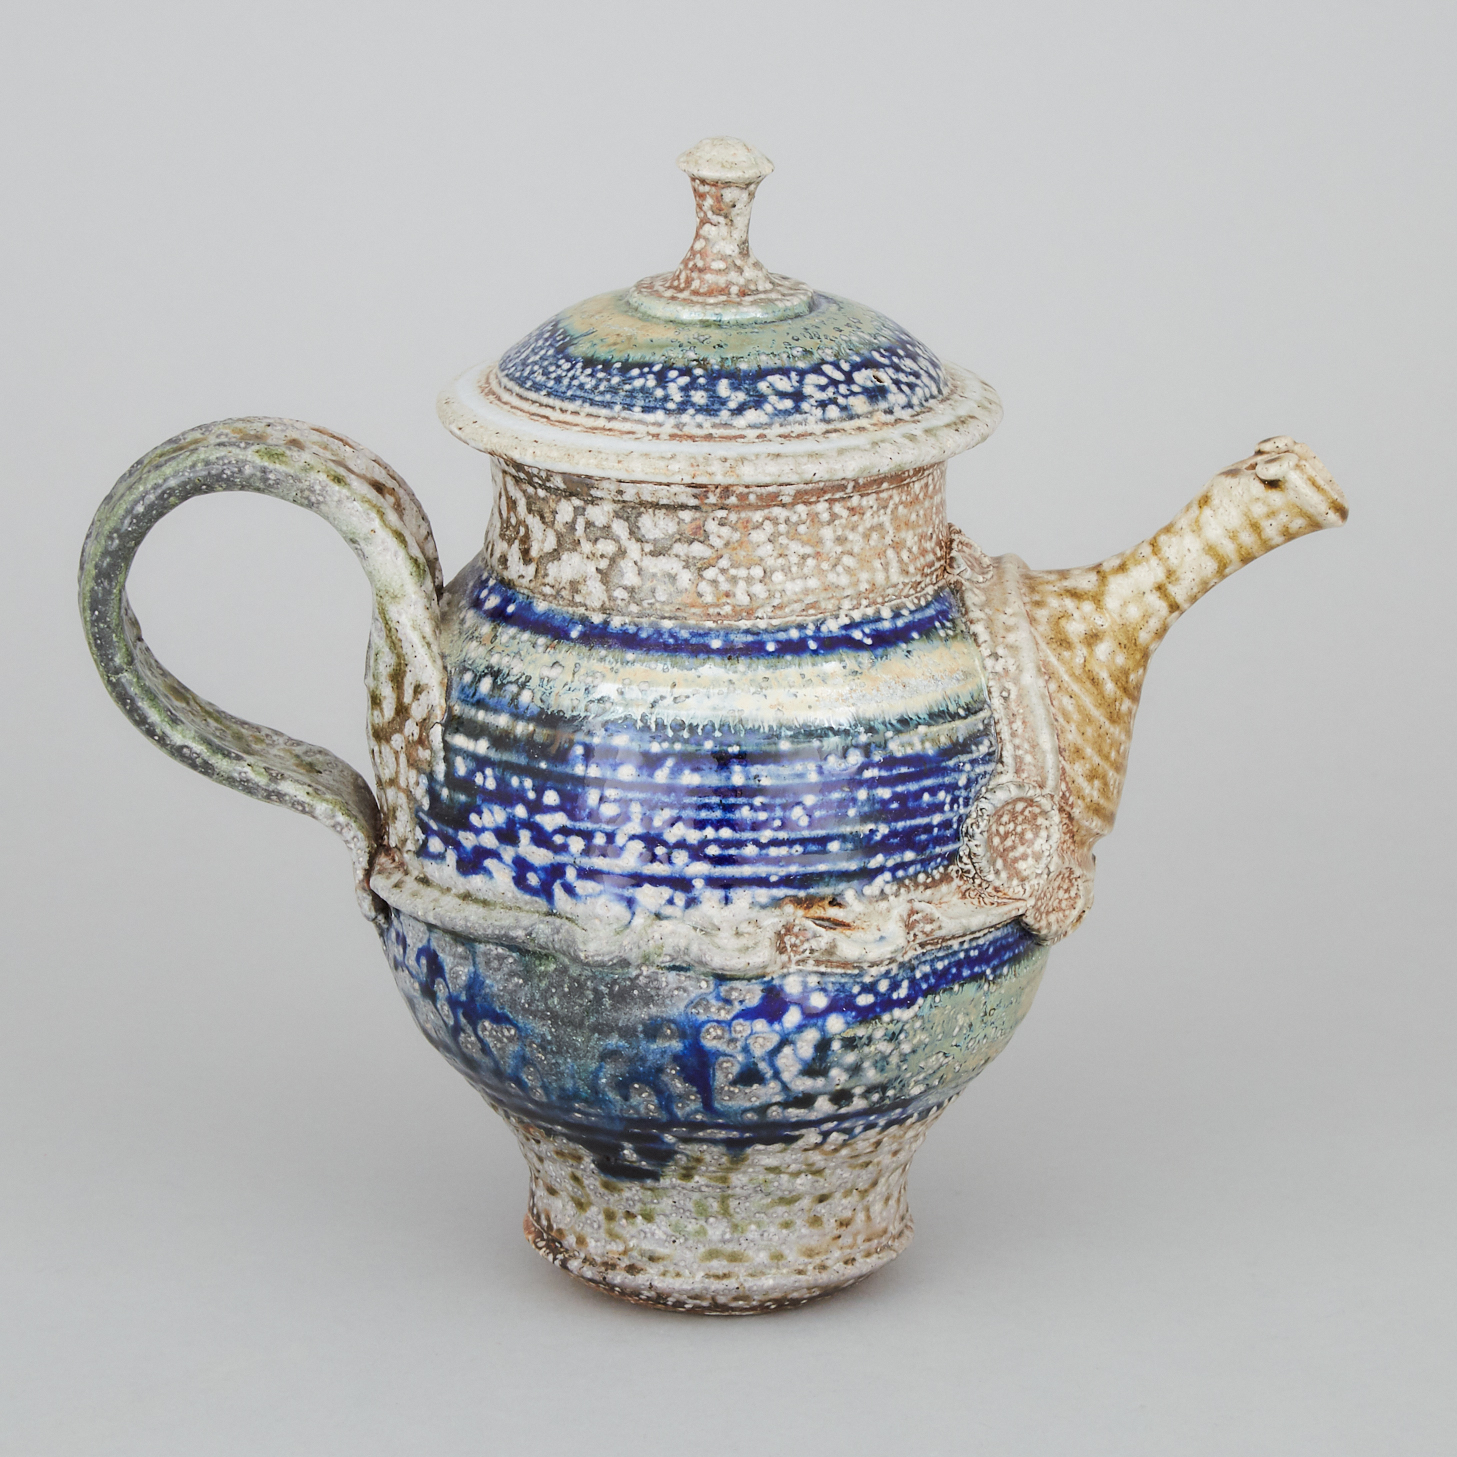 Wayne Cardinalli (Canadian, b.1944), Salt Glazed Stoneware Teapot, c.1974